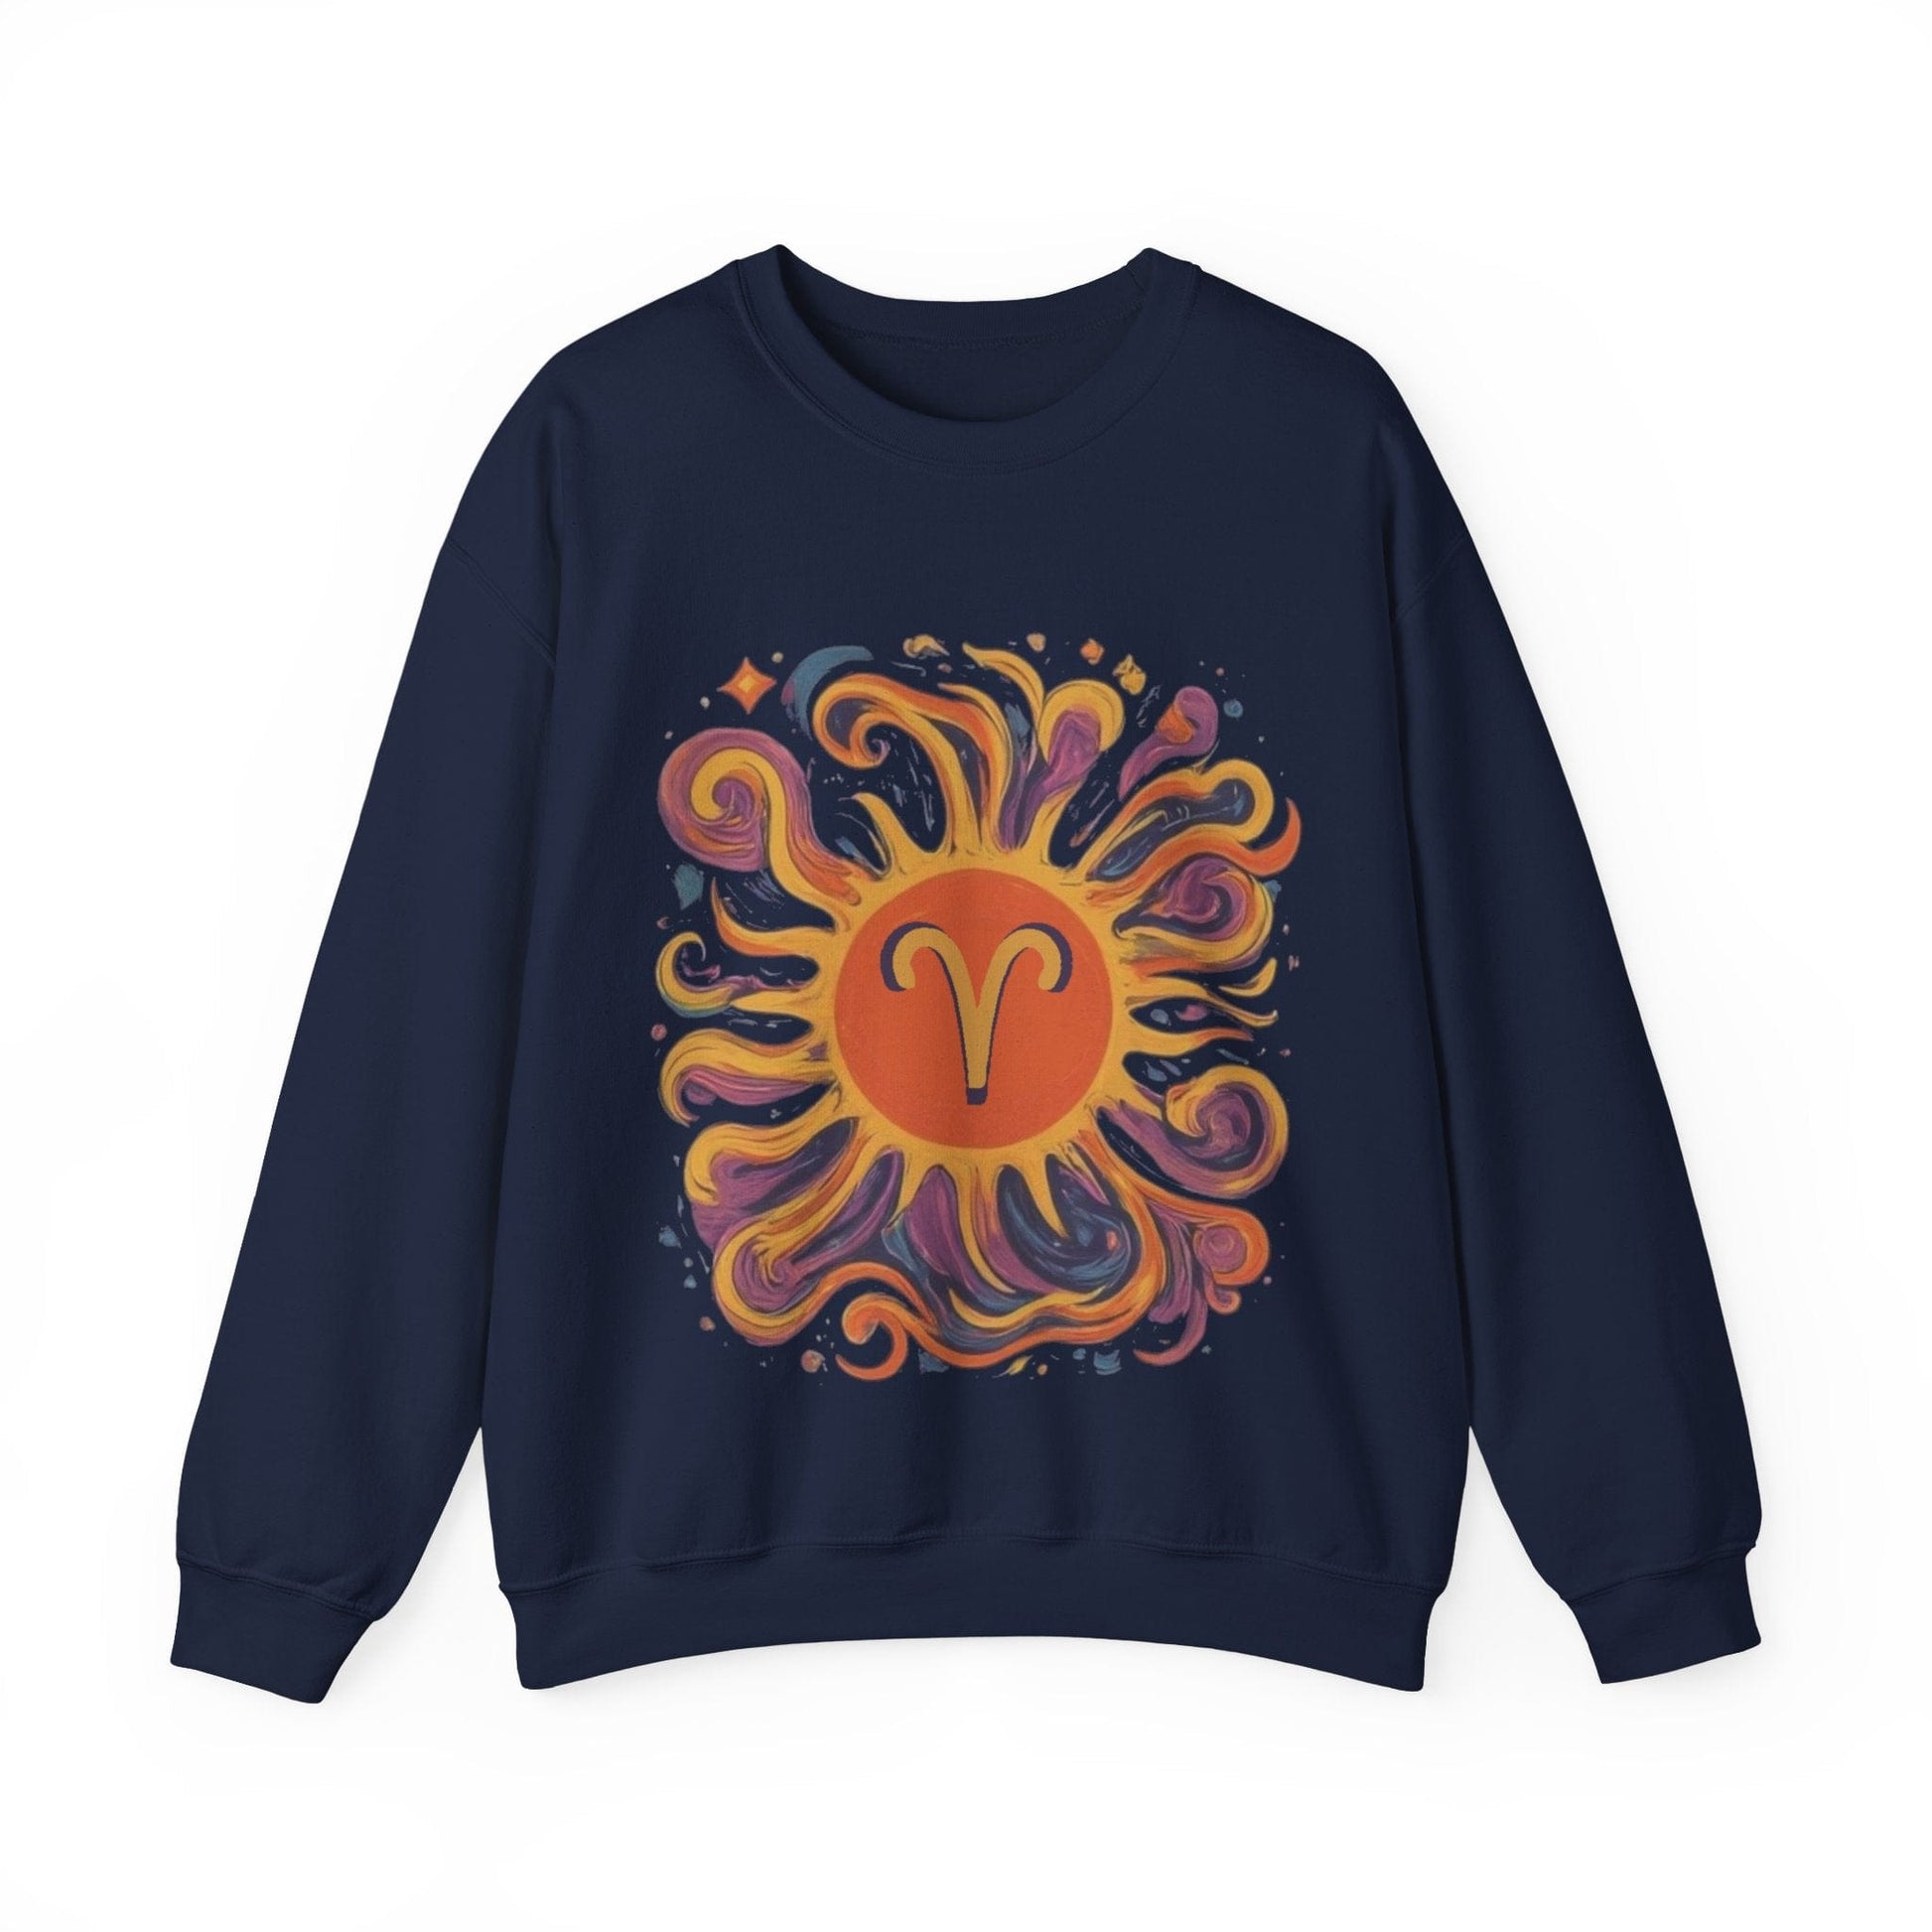 Sweatshirt S / Navy Aries Energetic Swirl Soft Sweater: Ignite Your Cozy Side